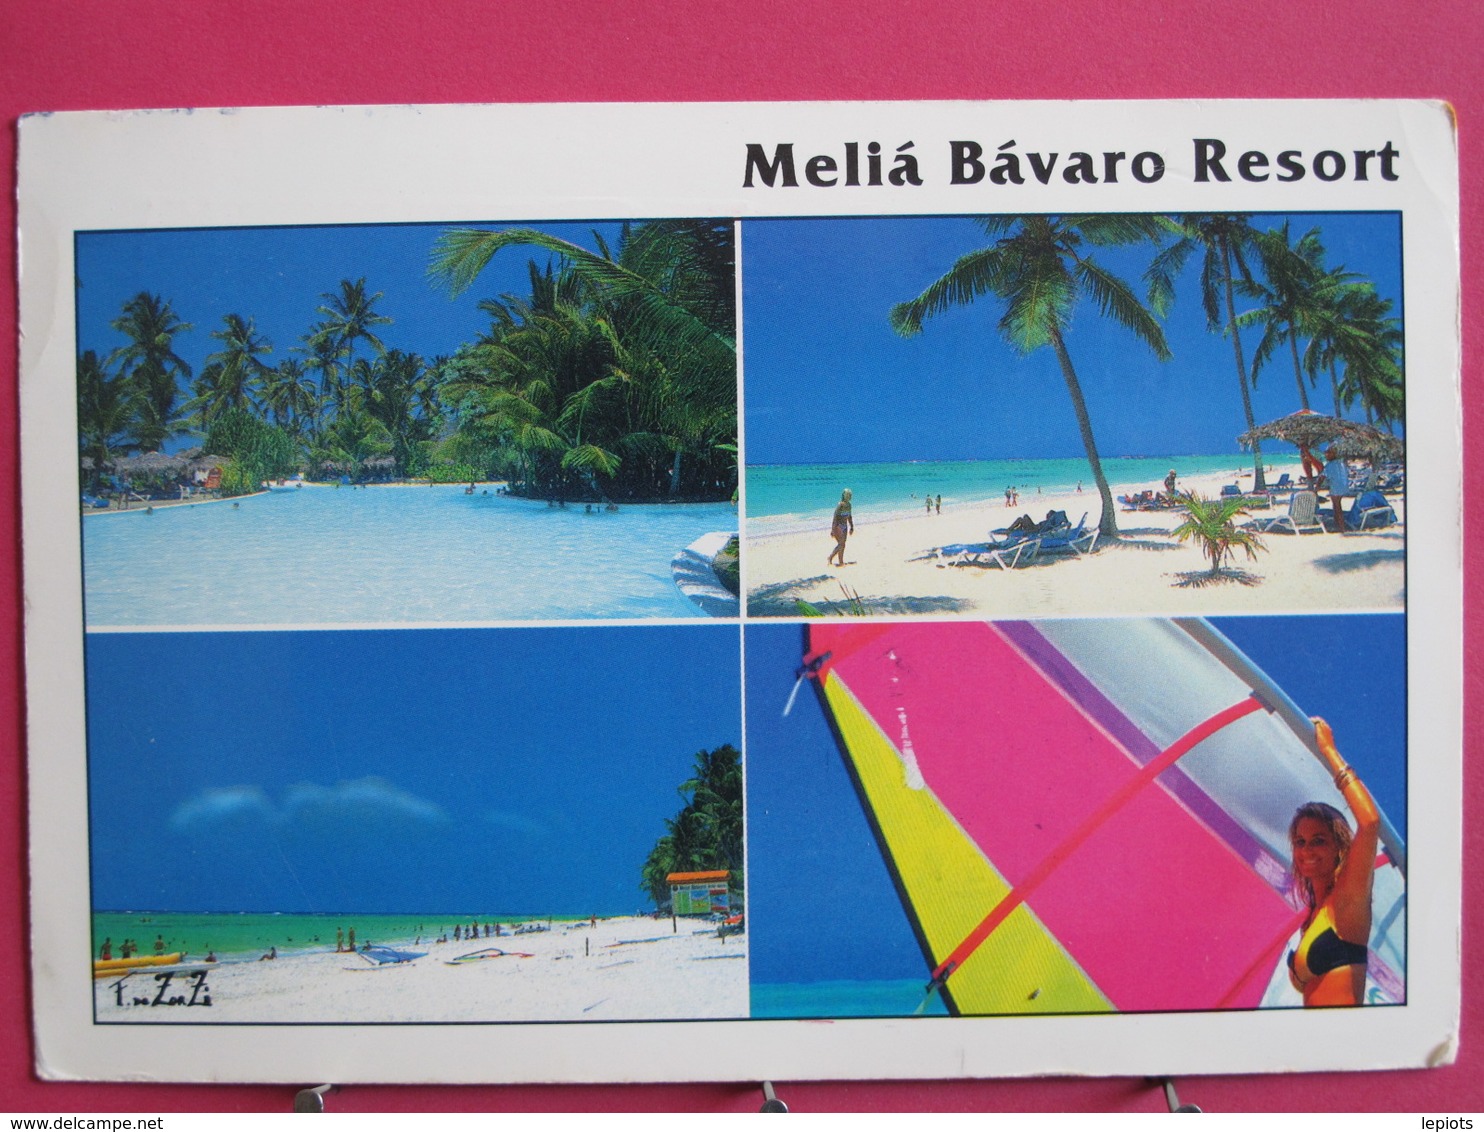 Visuel Très Peu Courant - République Dominicaine - Hotel Melia Bavaro Resort - Recto Verso - Dominican Republic